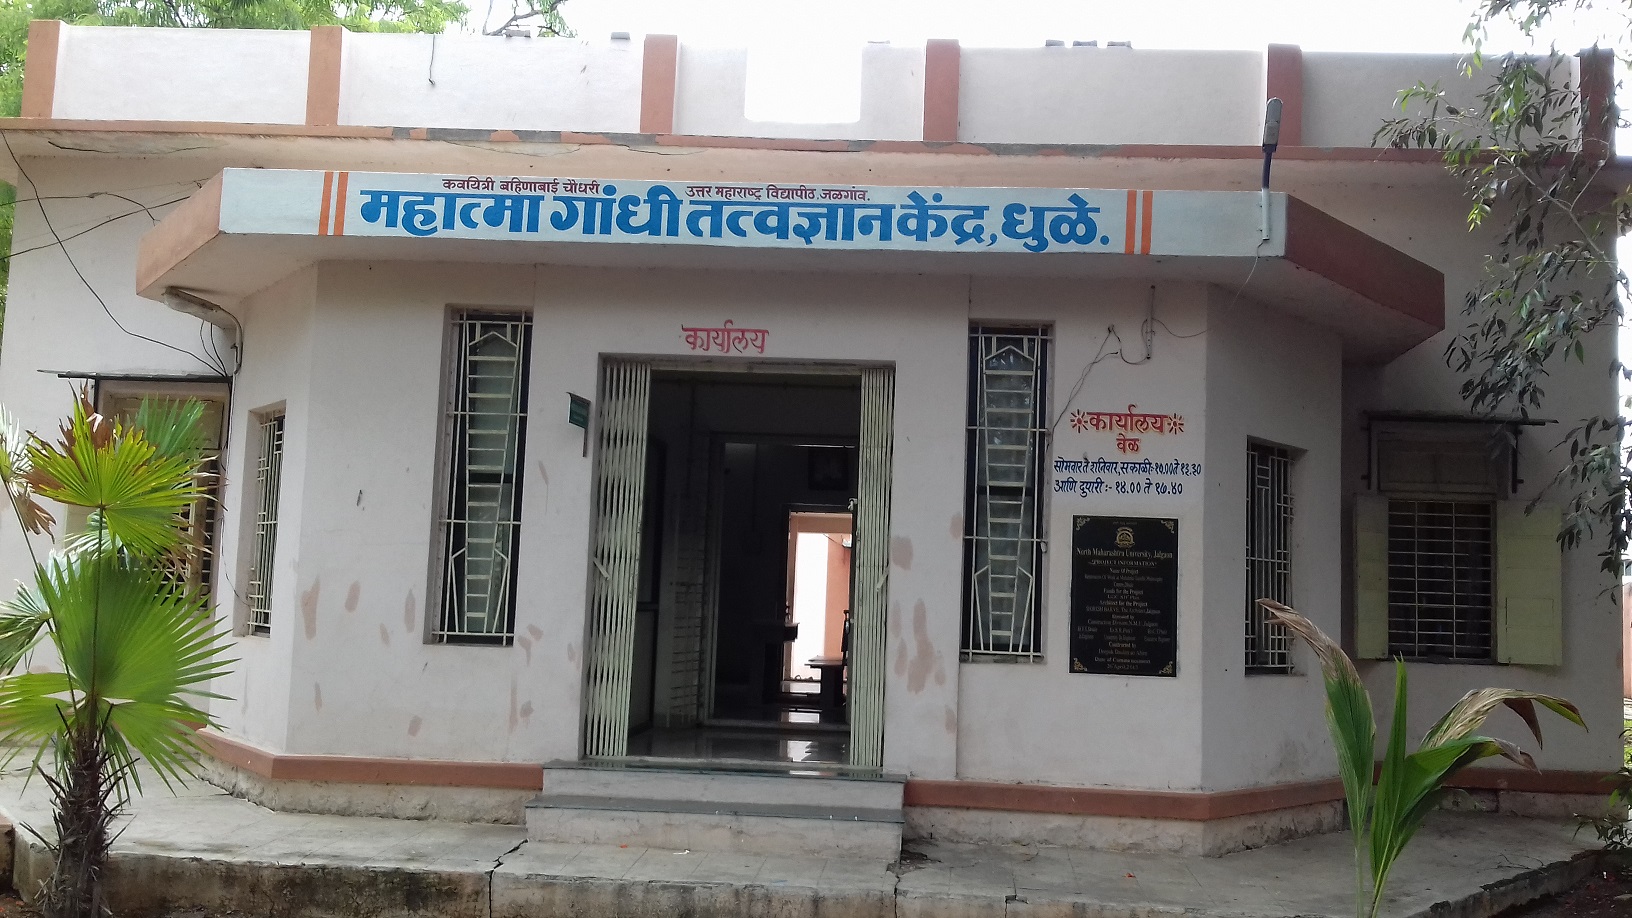 Mahatma Gandhi Philosophy Centre, Dhule